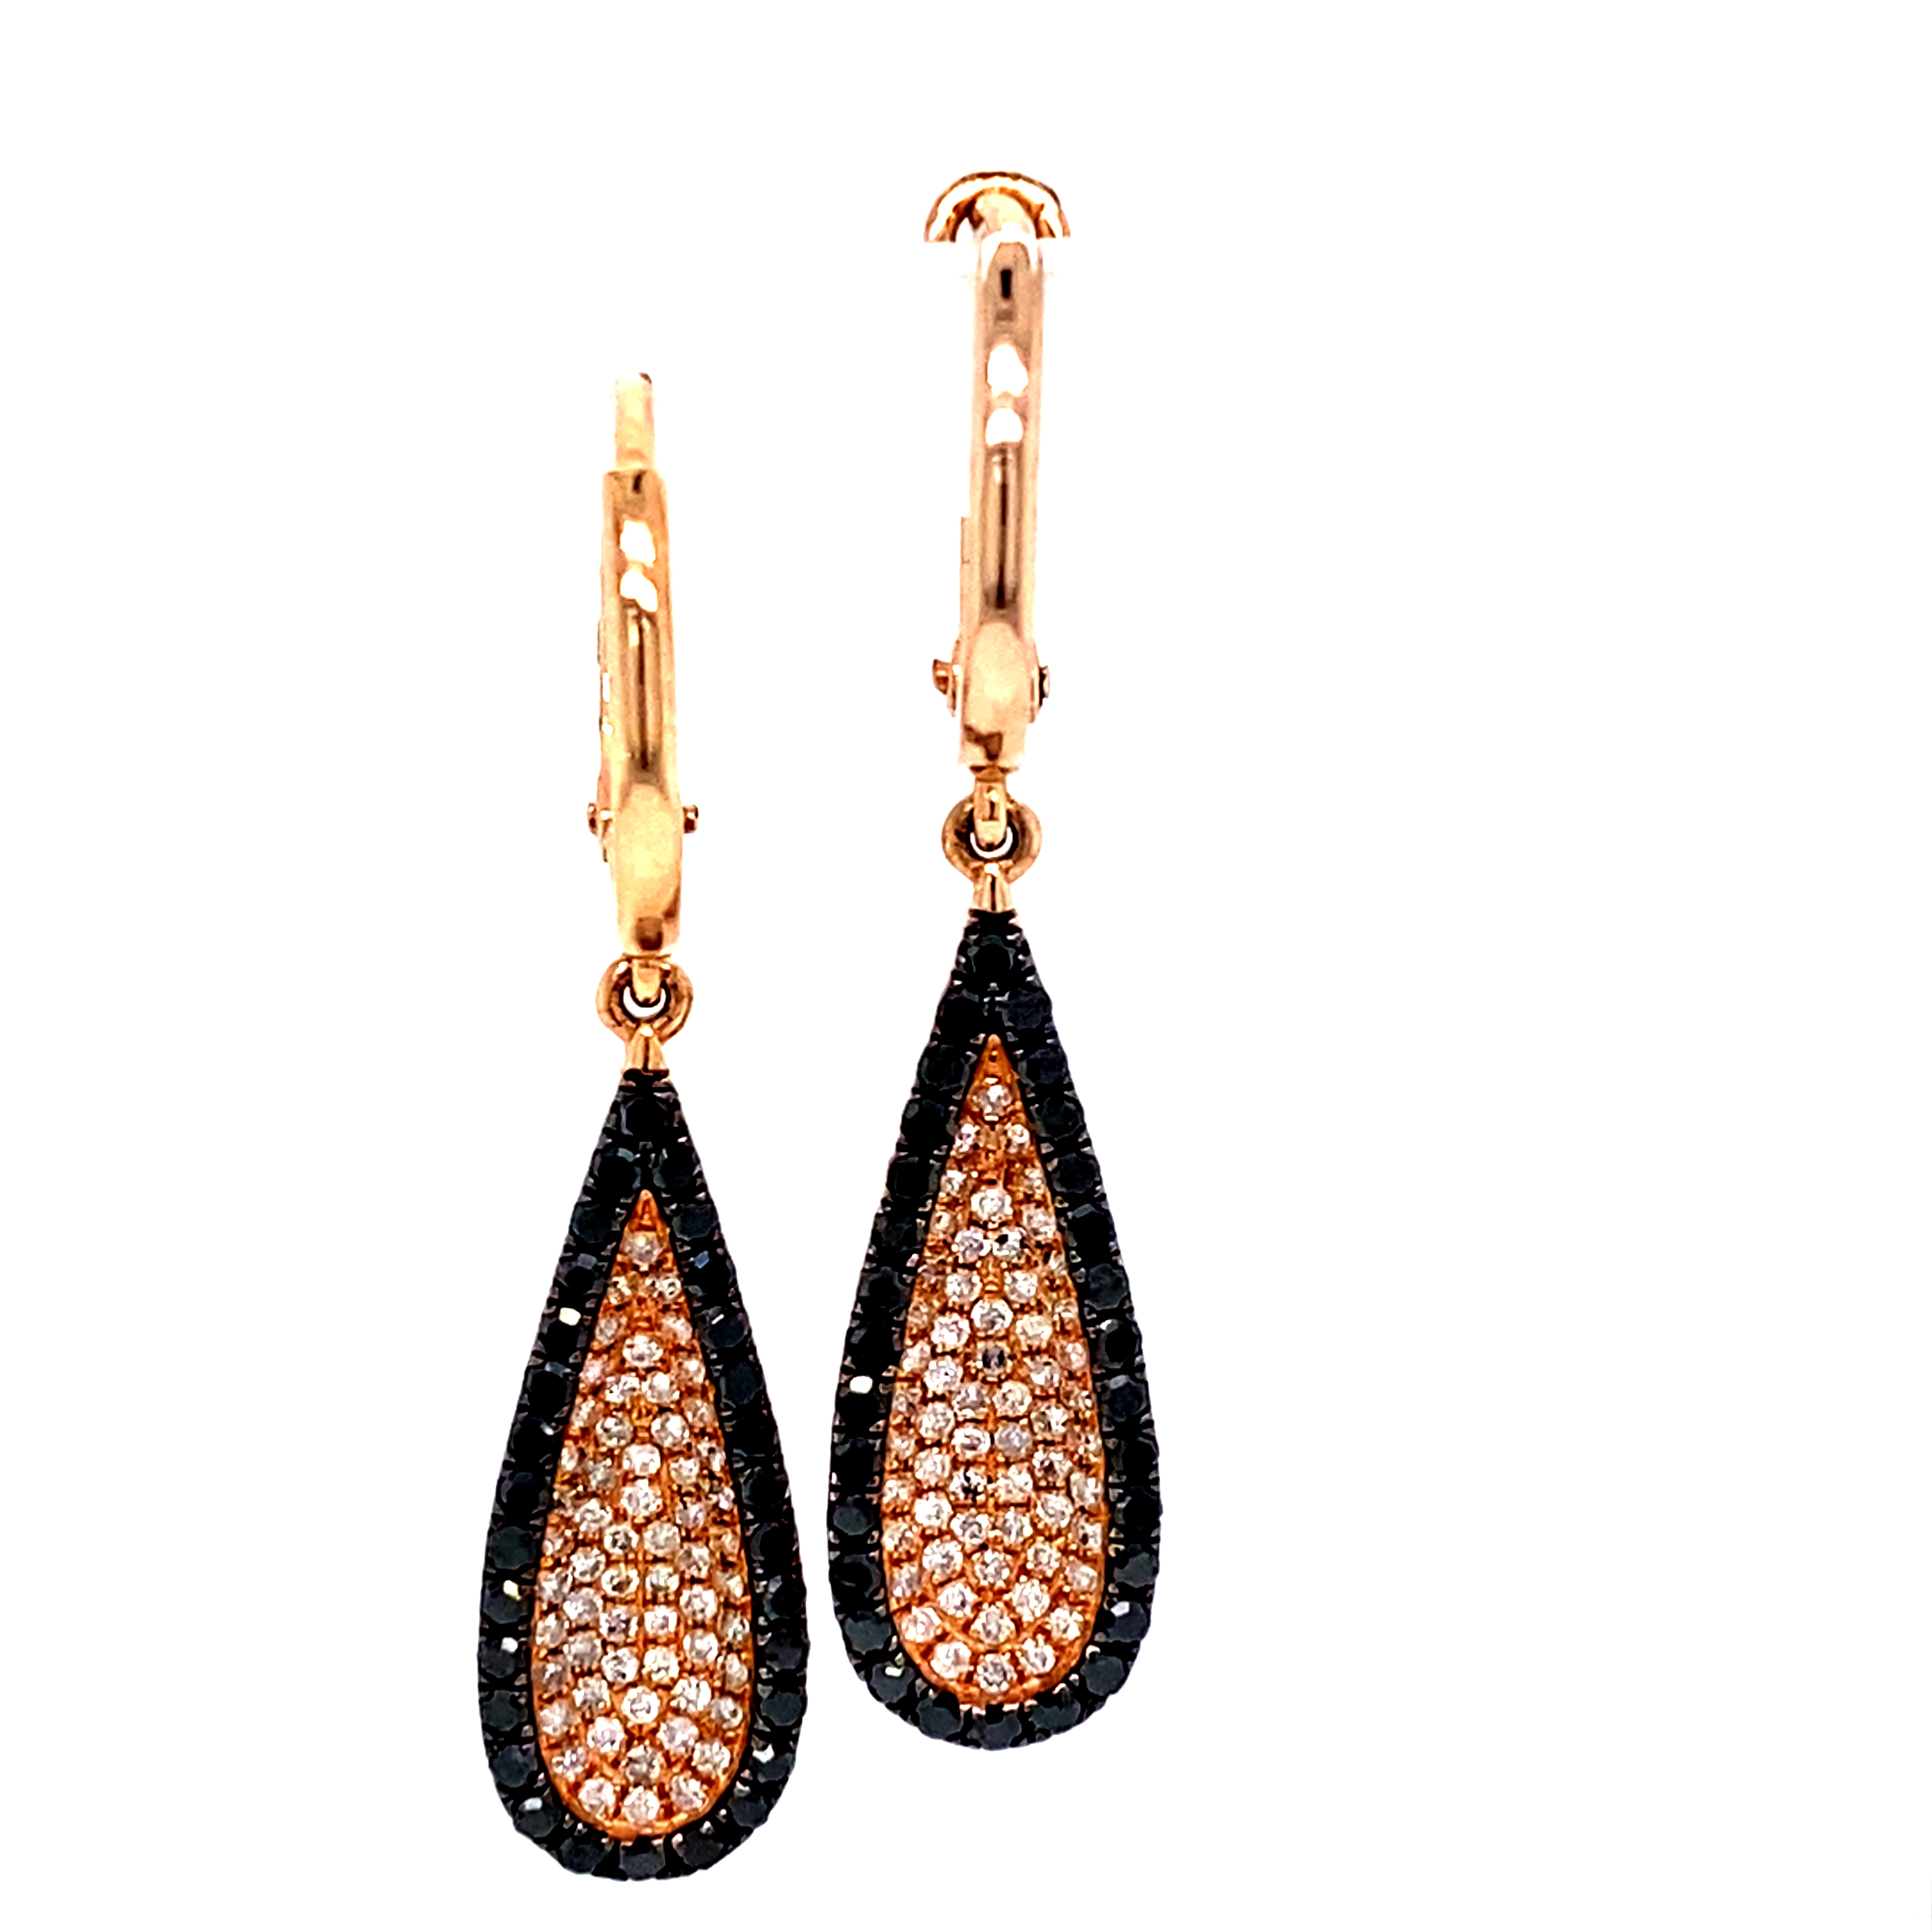 Black and White Diamond Earrings Set in 14 Carat Rose Gold